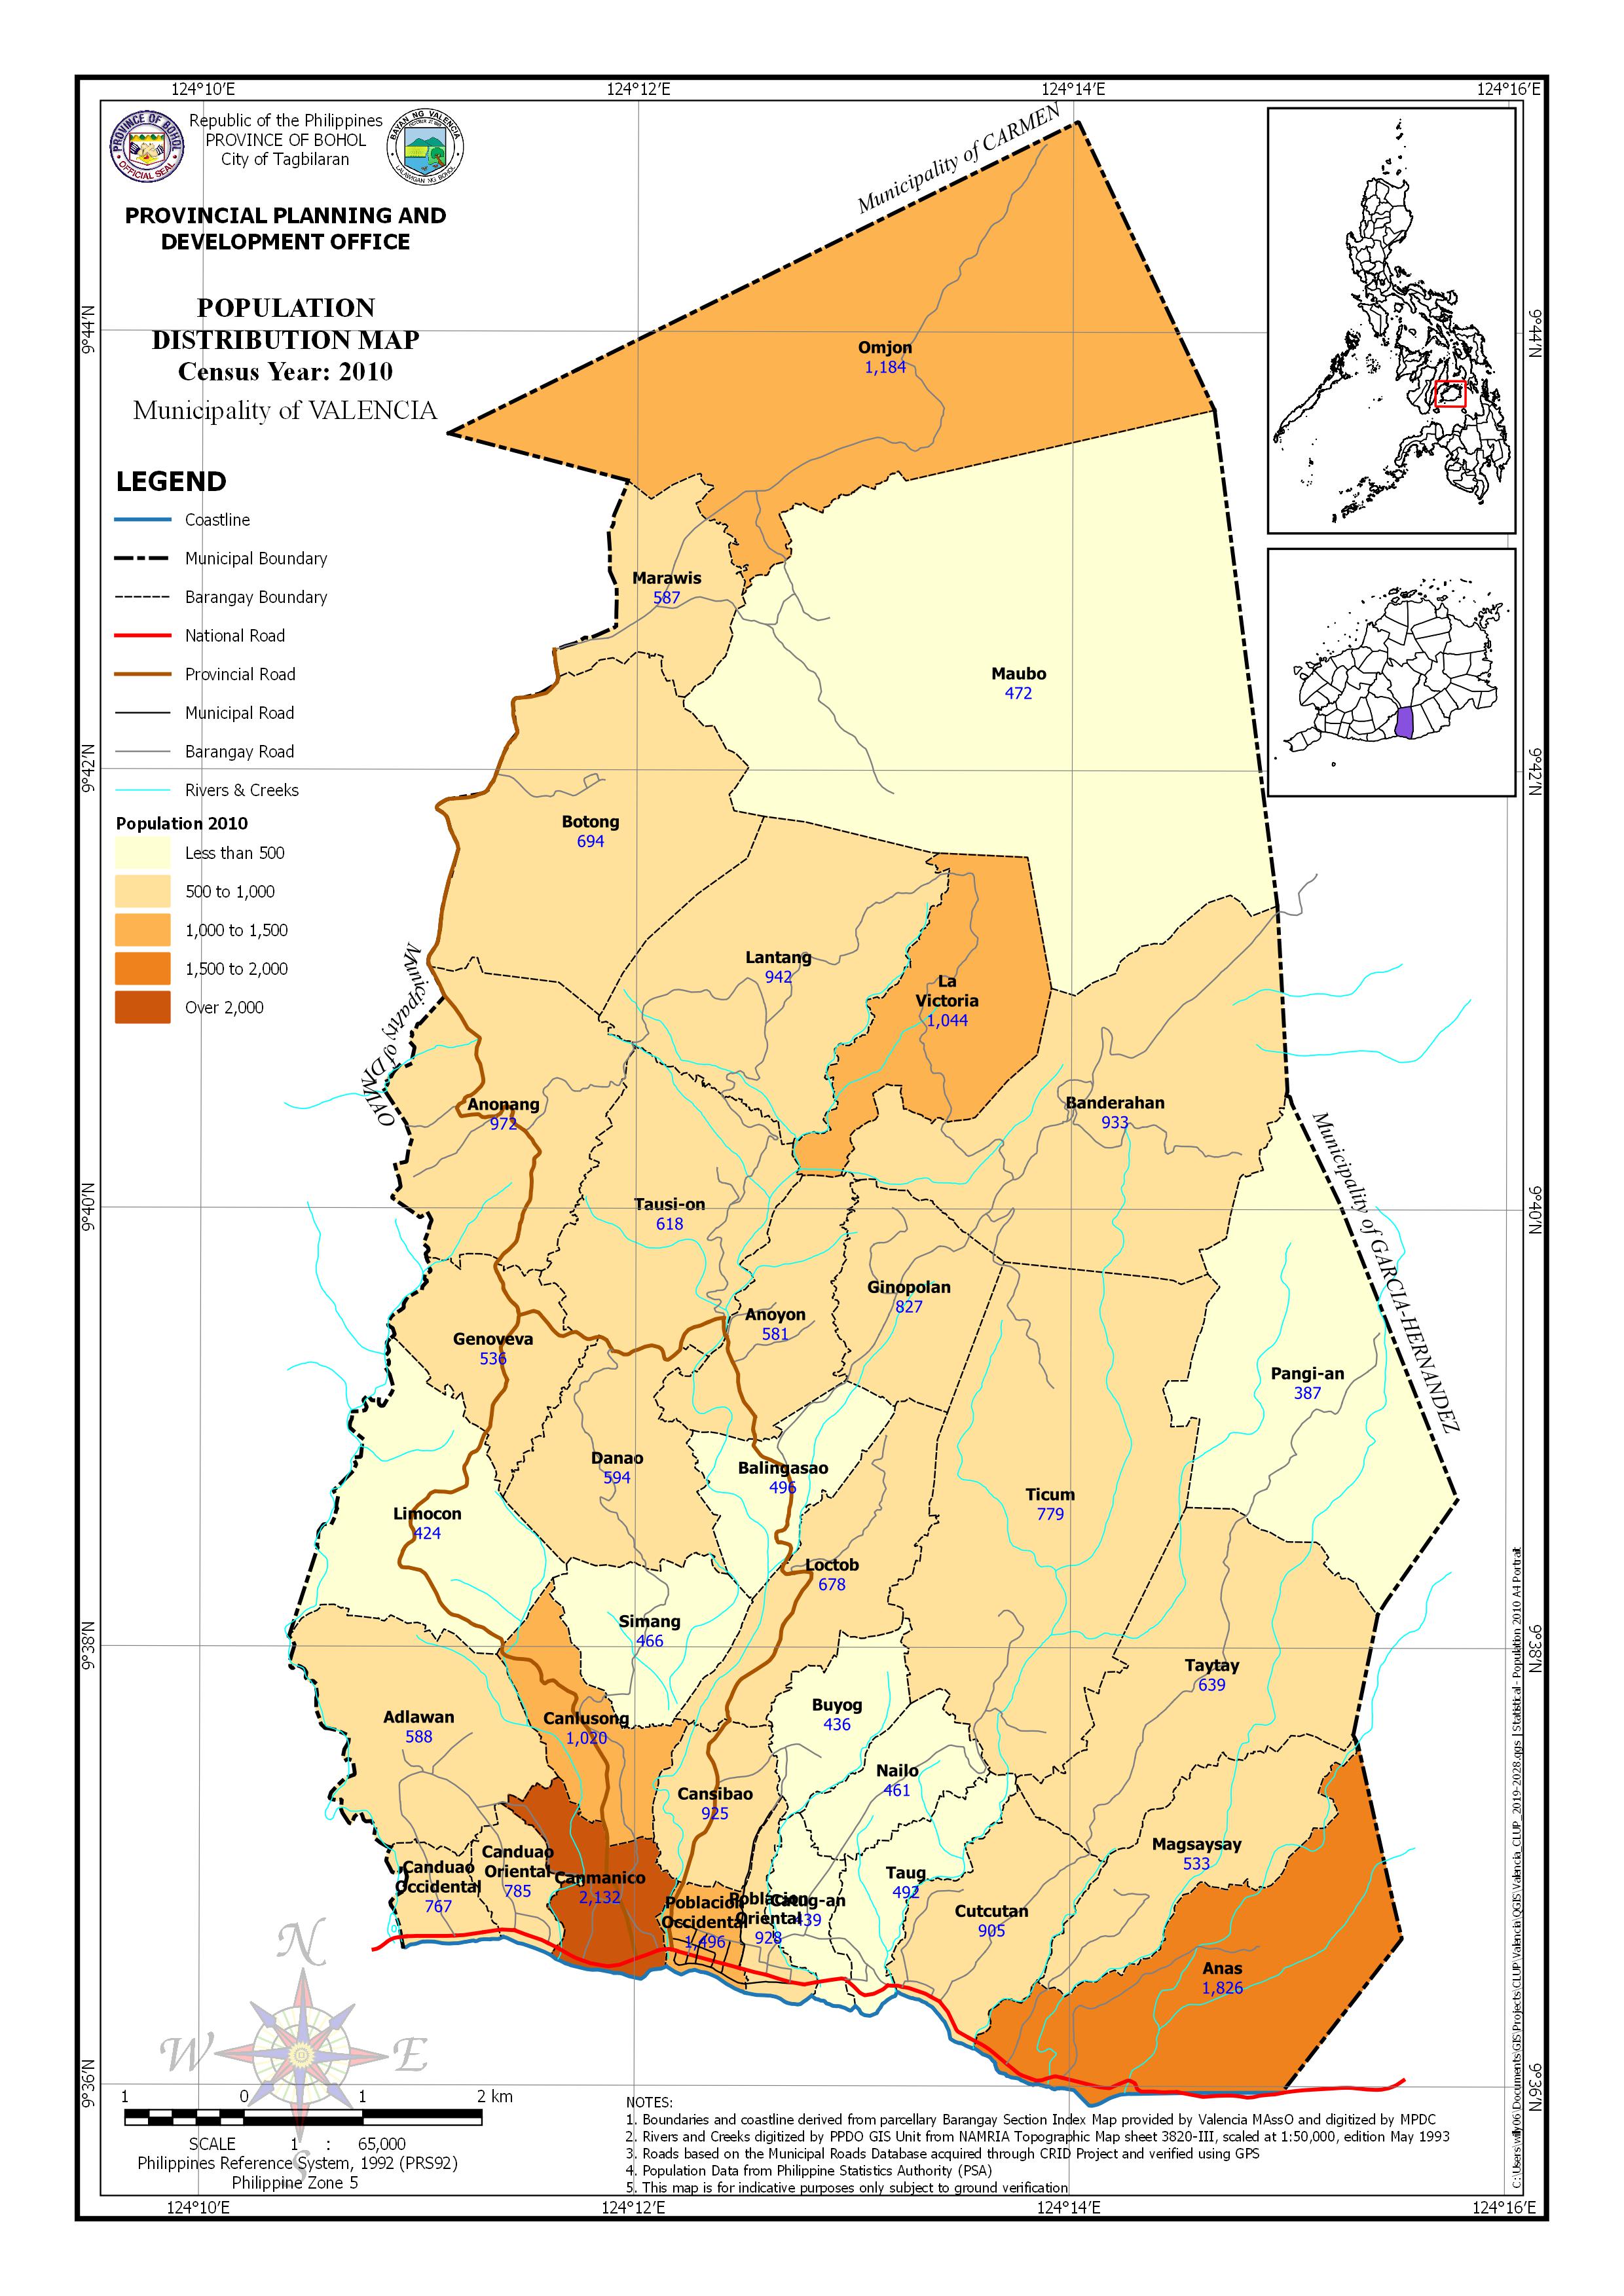 Population Distribution Census Year: 2010 Map